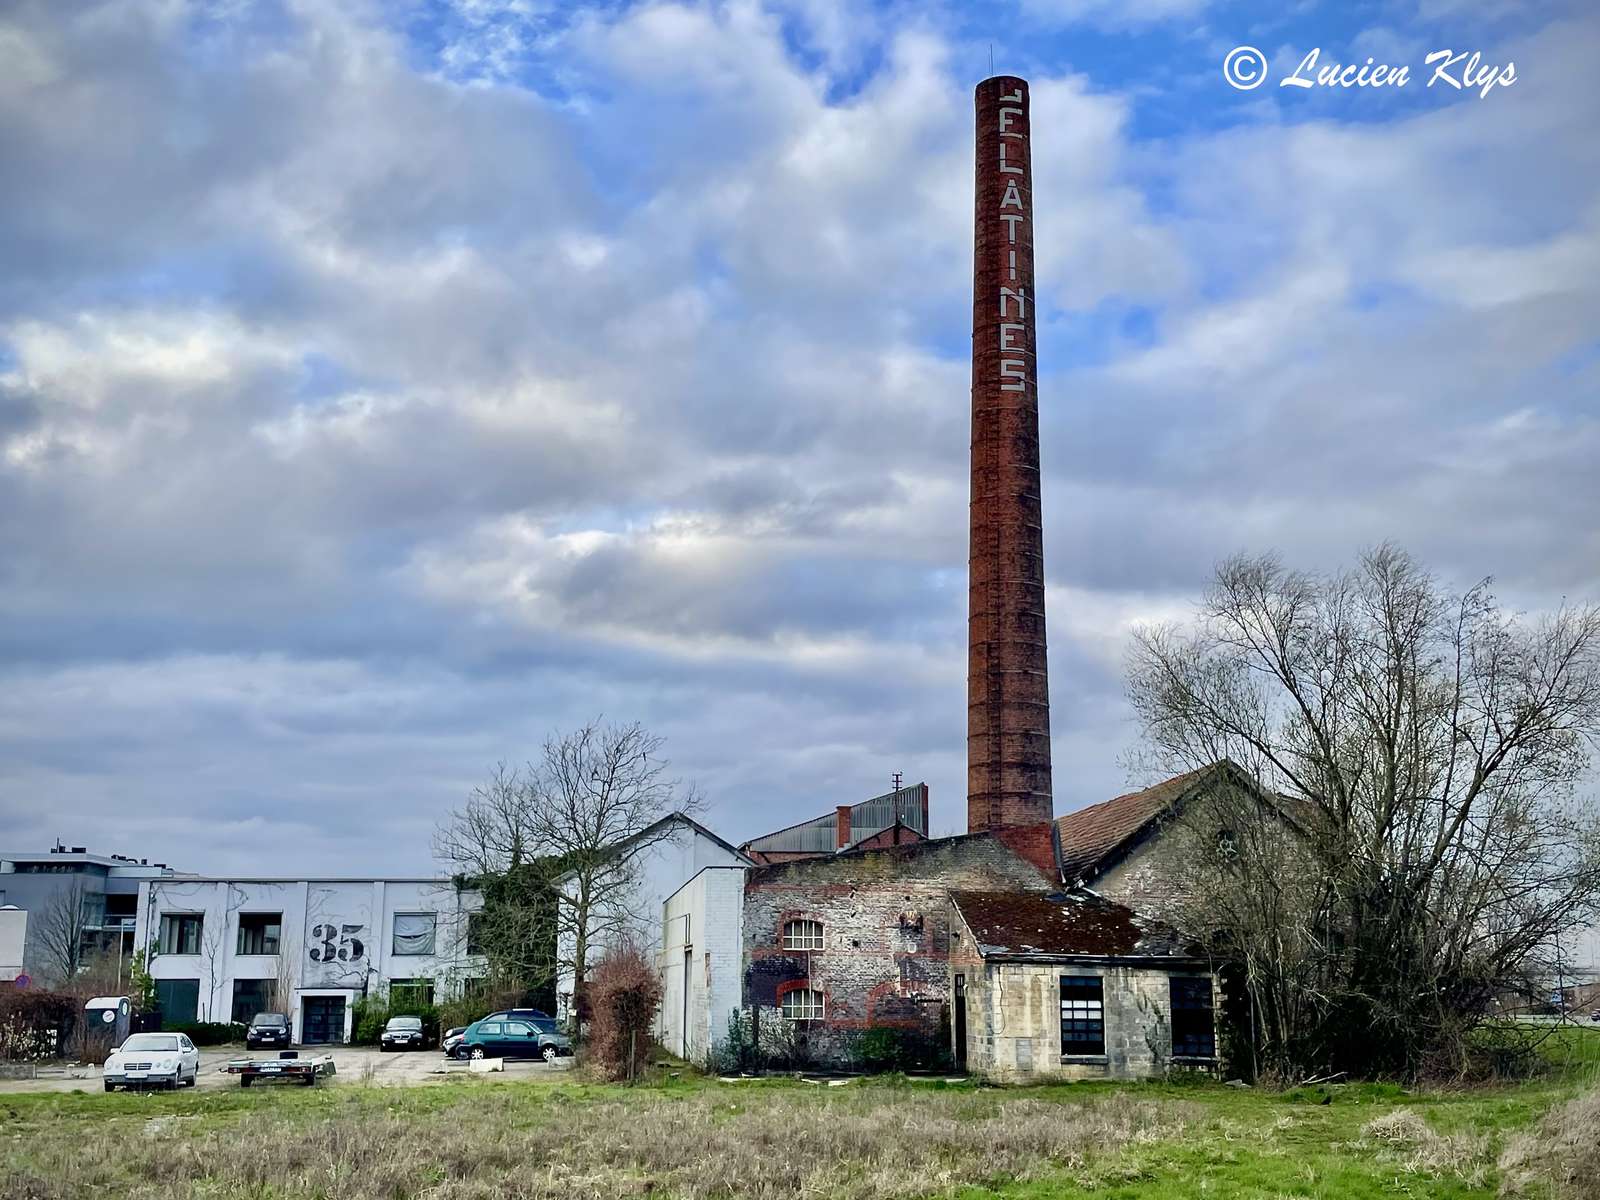 Gelatinfabriken Hasselt pussel online från foto